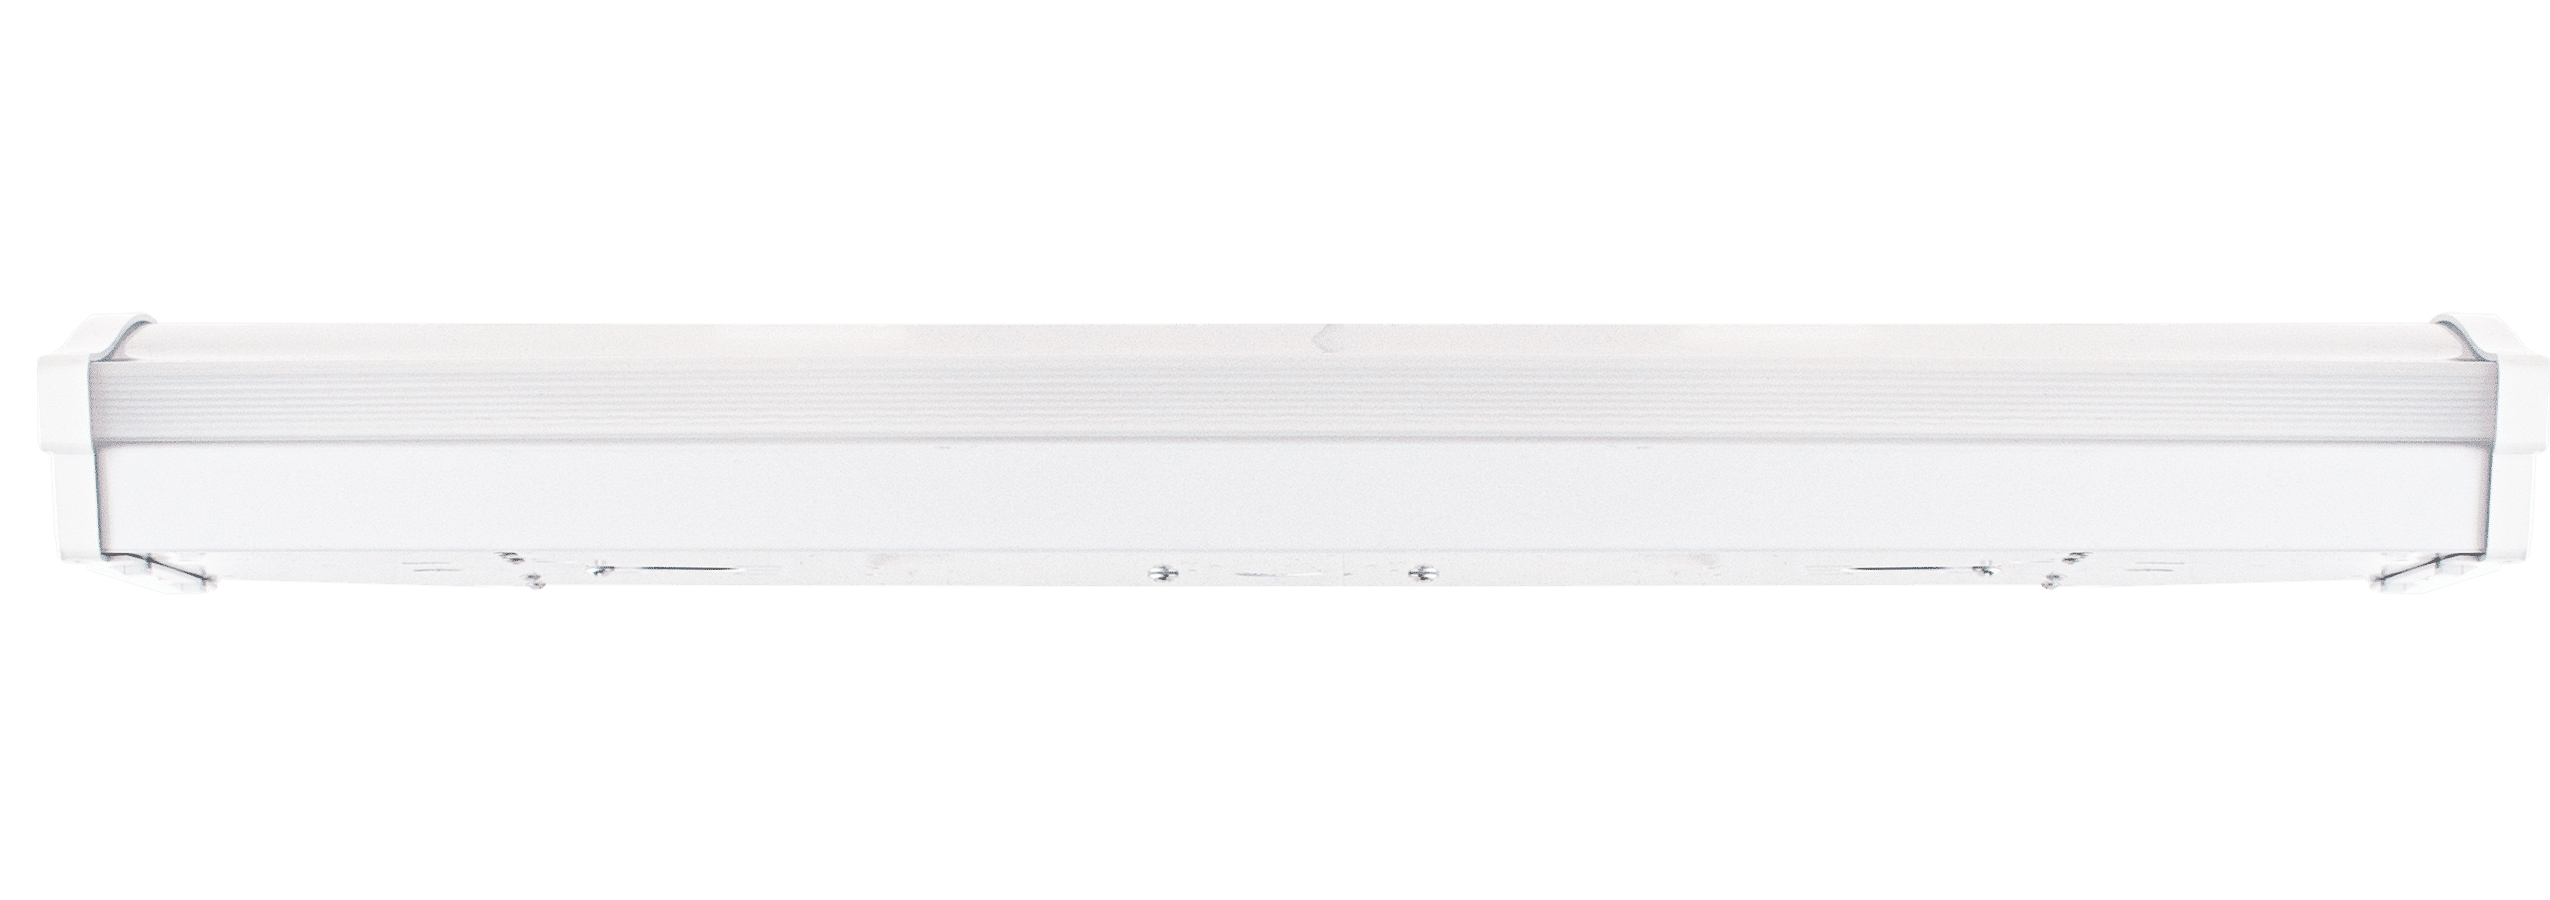 Westgate WA-2FT-25W-35K-D LED Architectural Wrap-Around Light - White